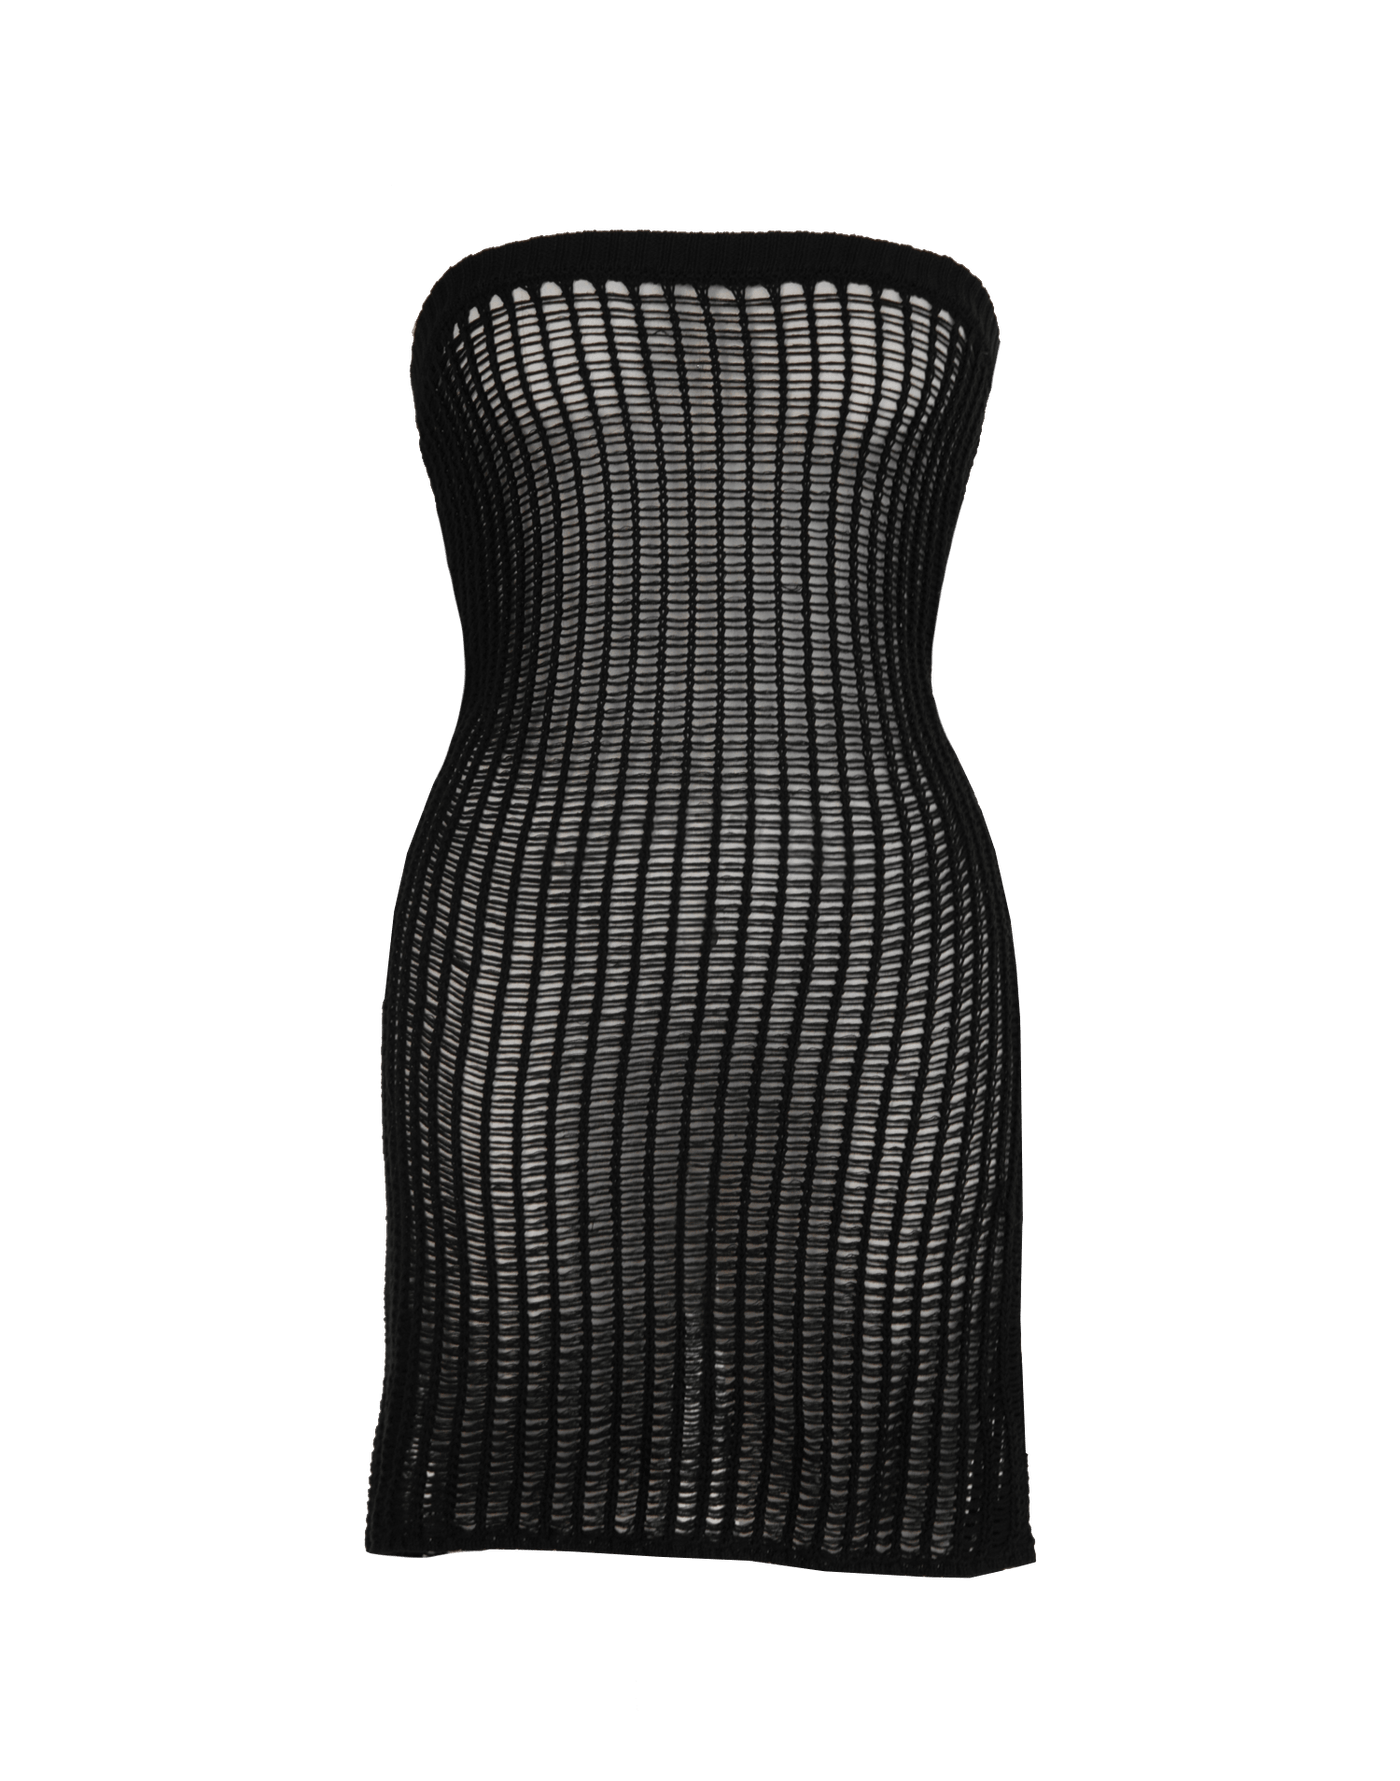 Synergy Mini Dress (Black) - Black Crochet Mini Dress - Women's Dress - Charcoal Clothing